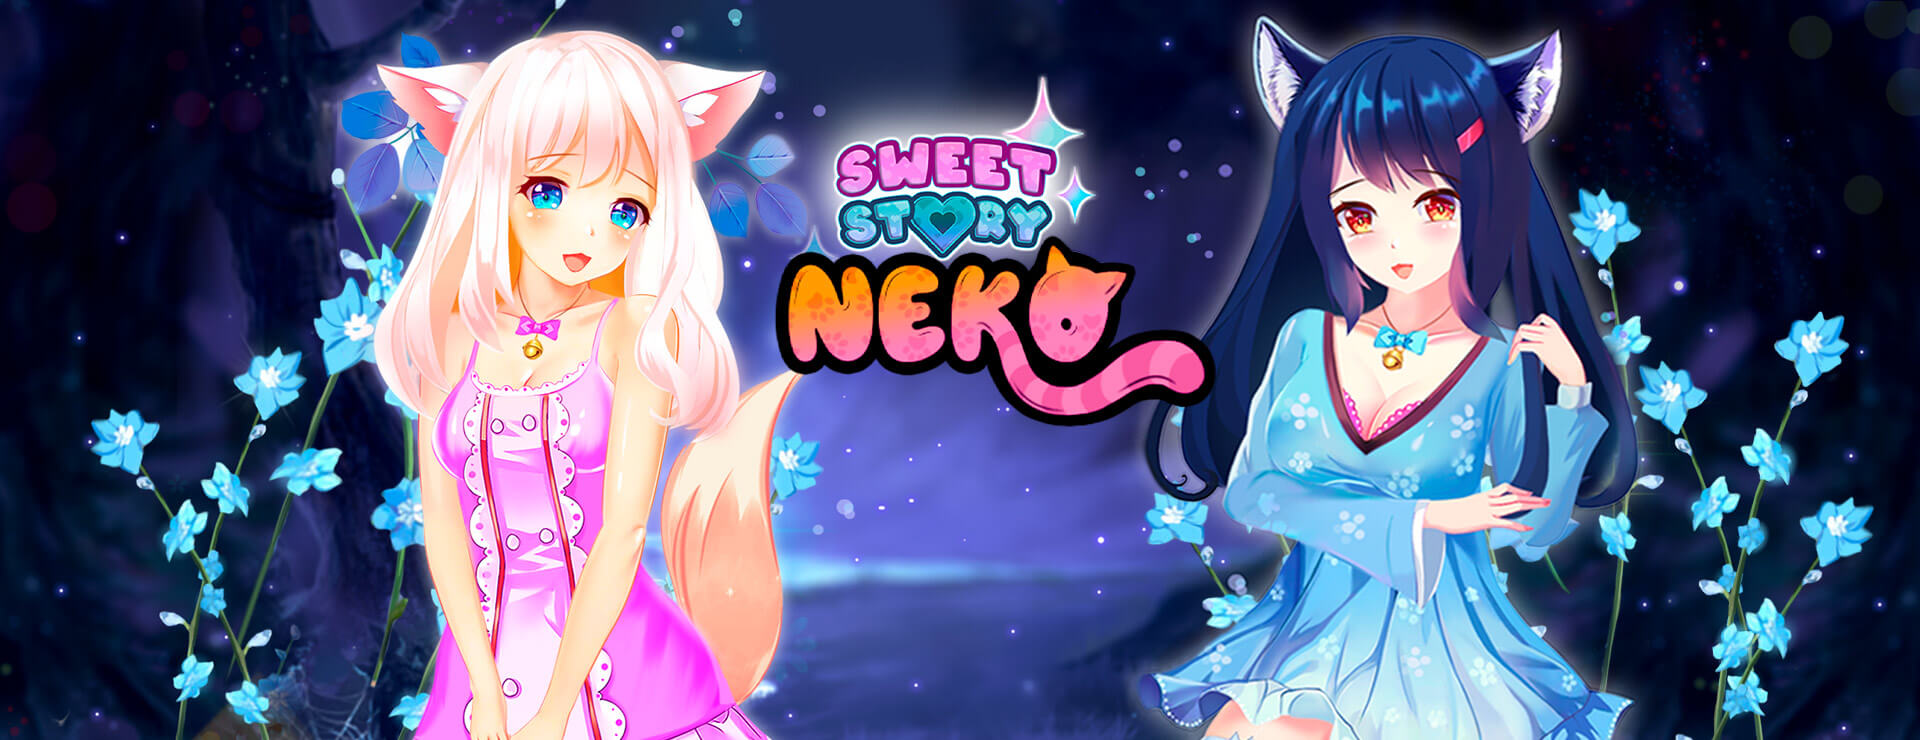 Sweet Story Neko - Casual Game